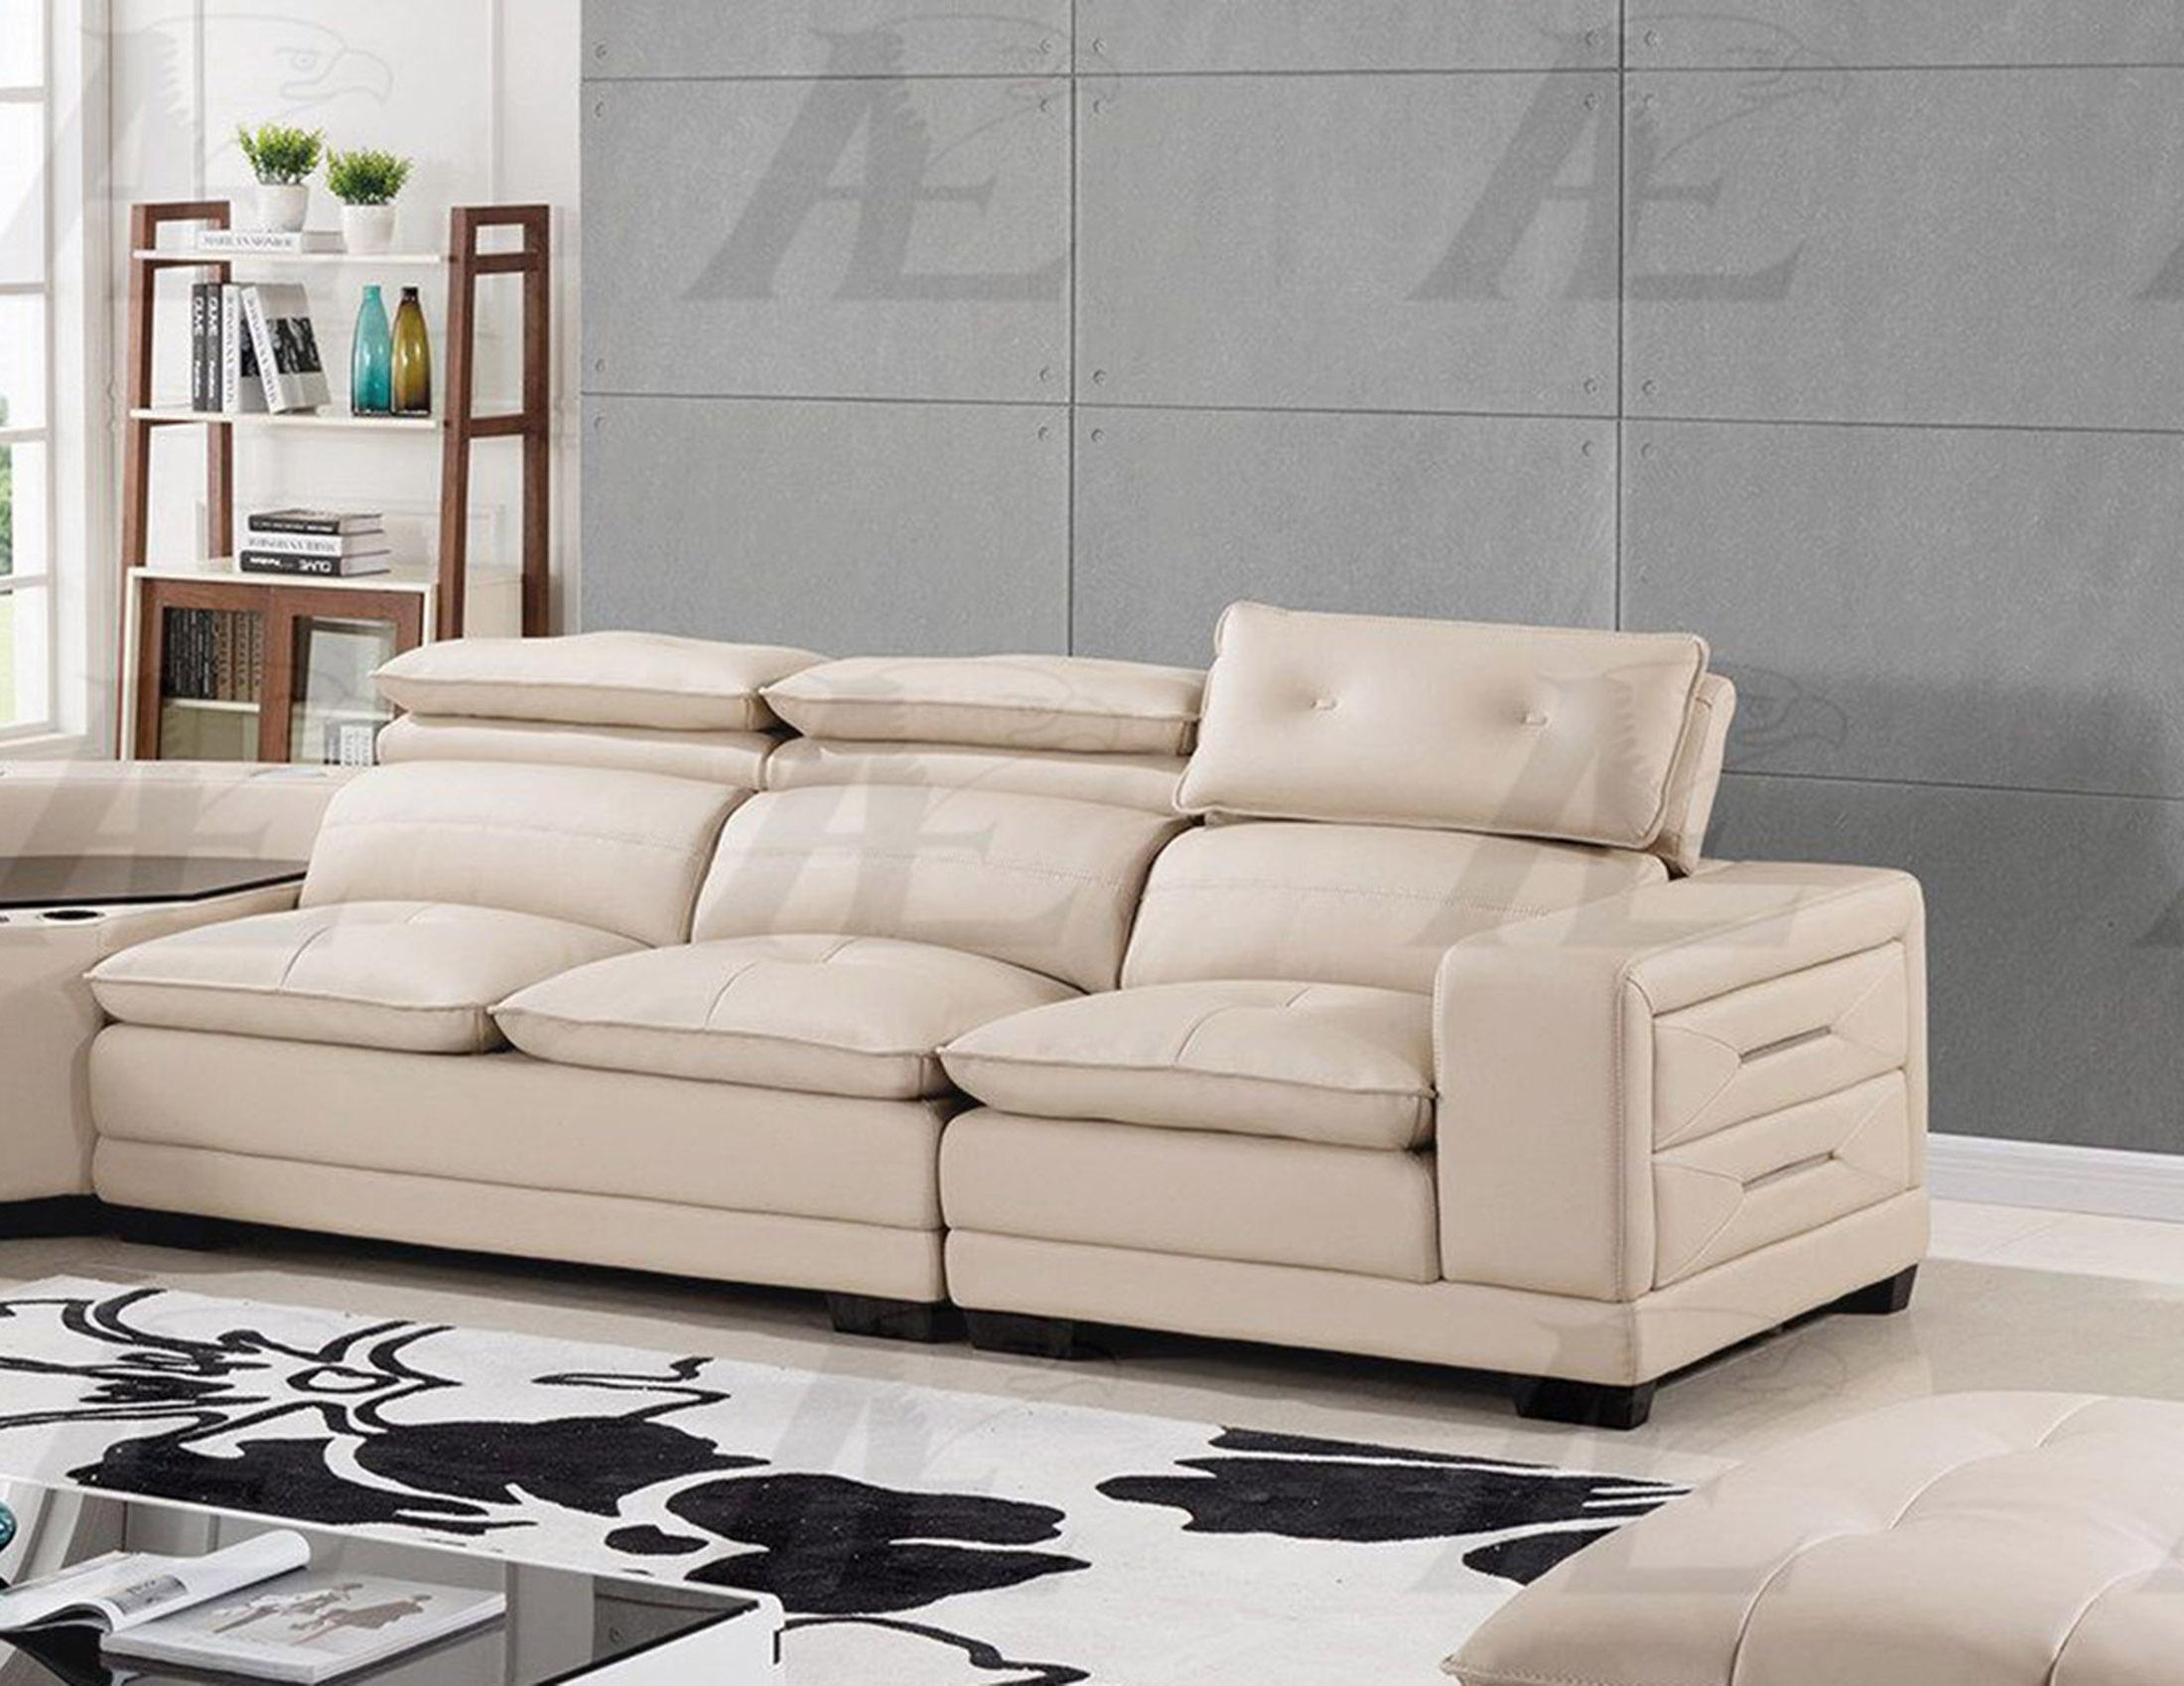 

    
AE-L688M-LG American Eagle Furniture Sectional Sofa Set
